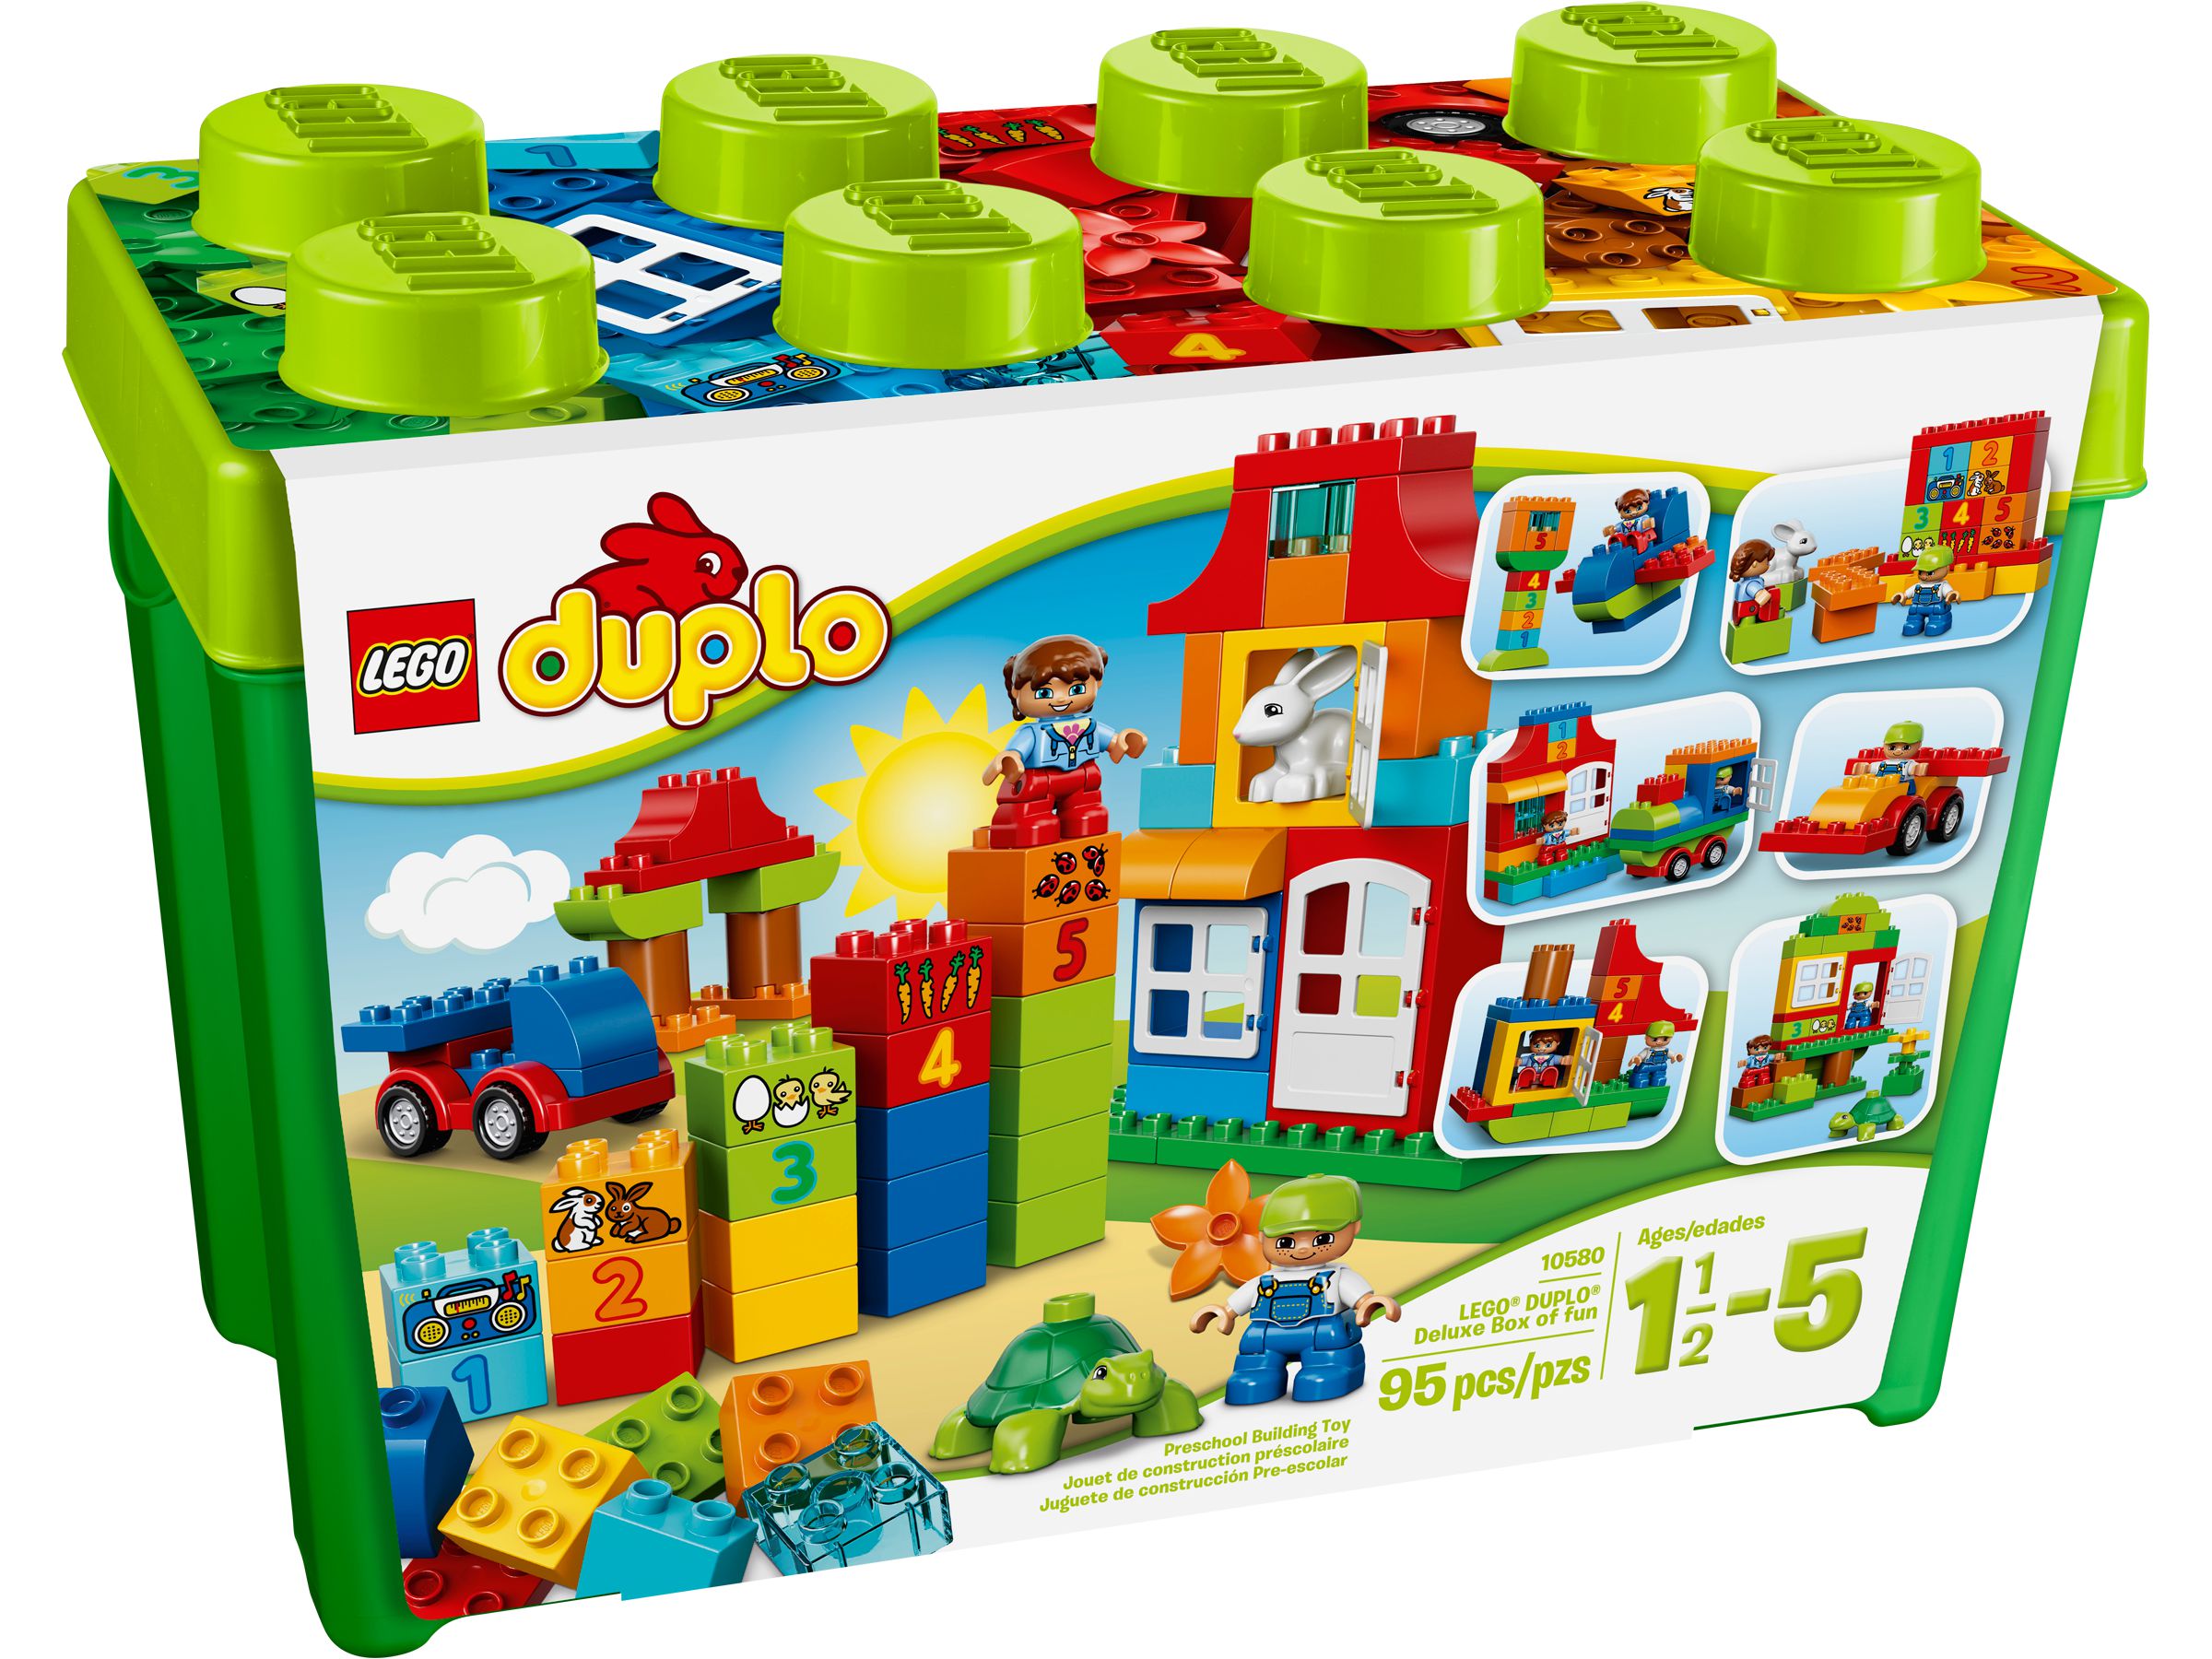 LEGO Duplo 10580 LEGO® DUPLO® Deluxe Steinebox LEGO_10580_alt1.jpg